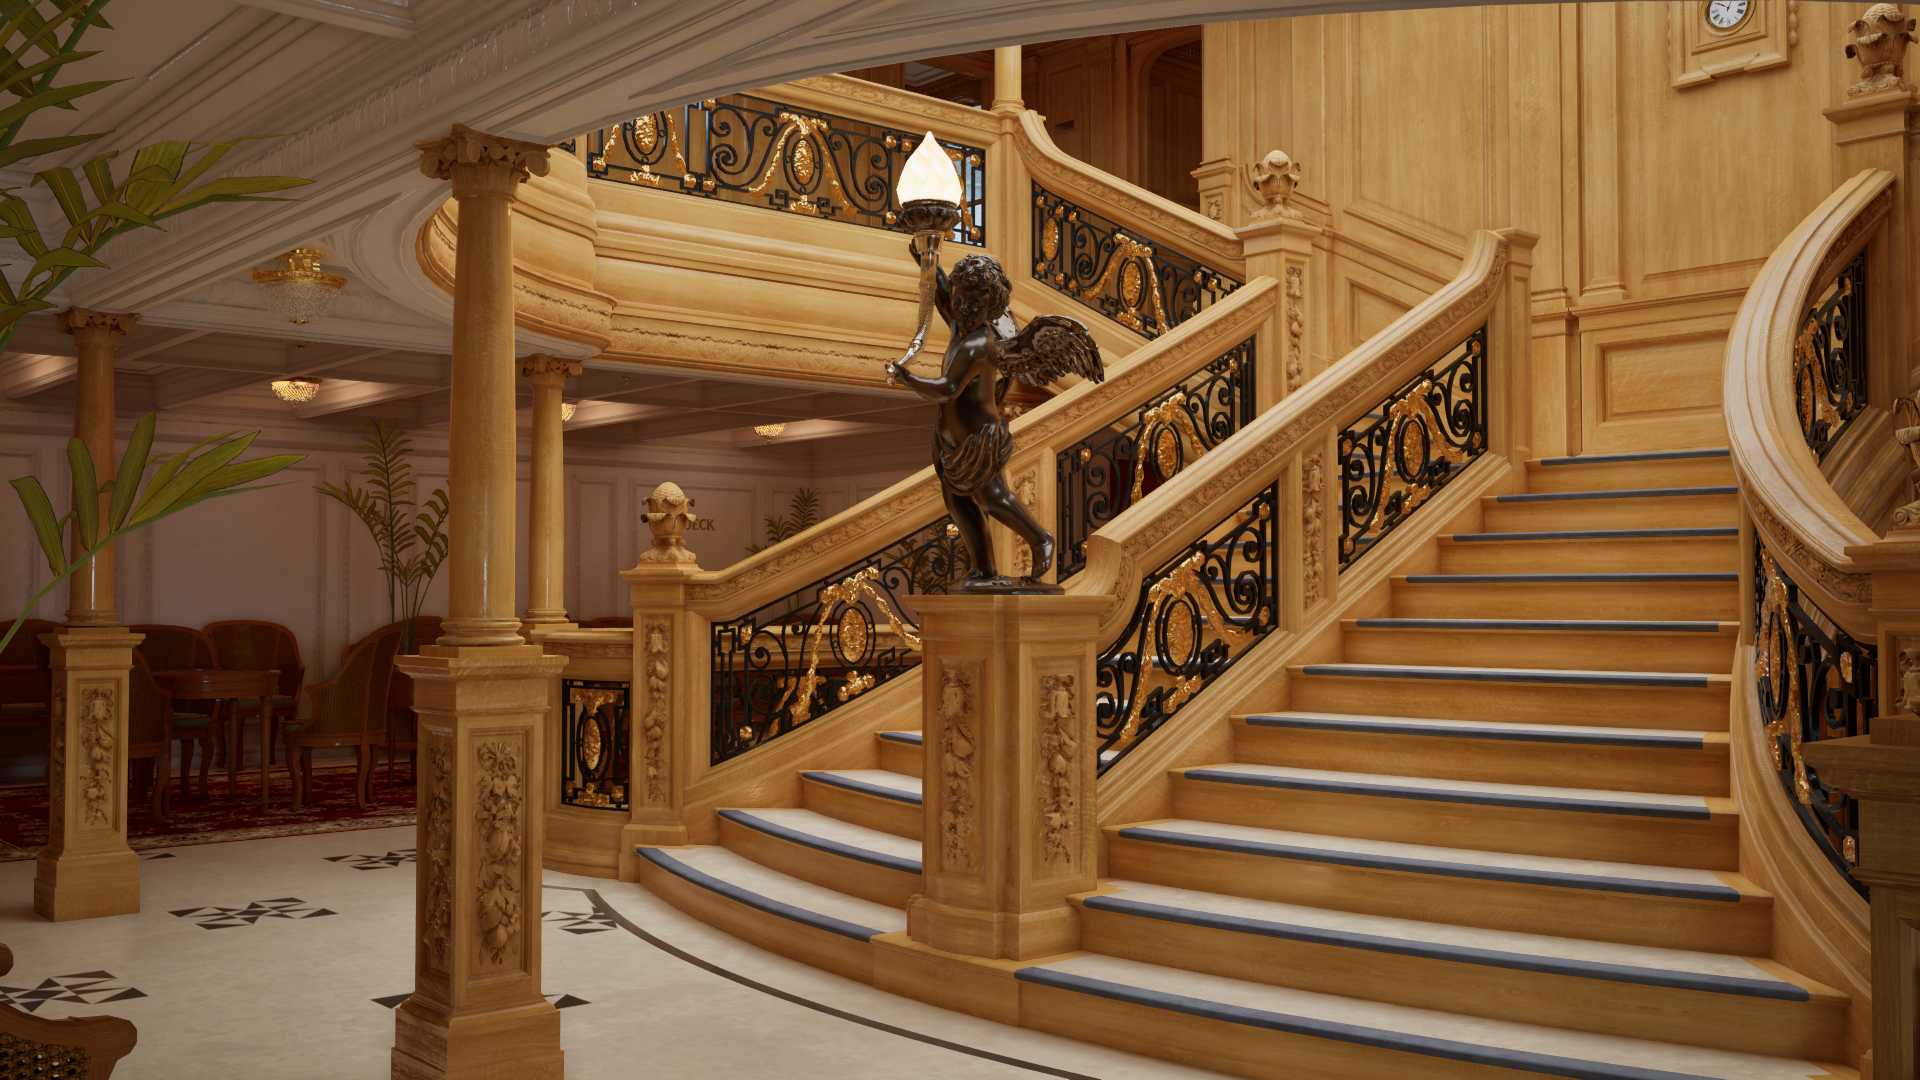 General 1920x1080 Titanic Demo401 architecture stairs statue interior